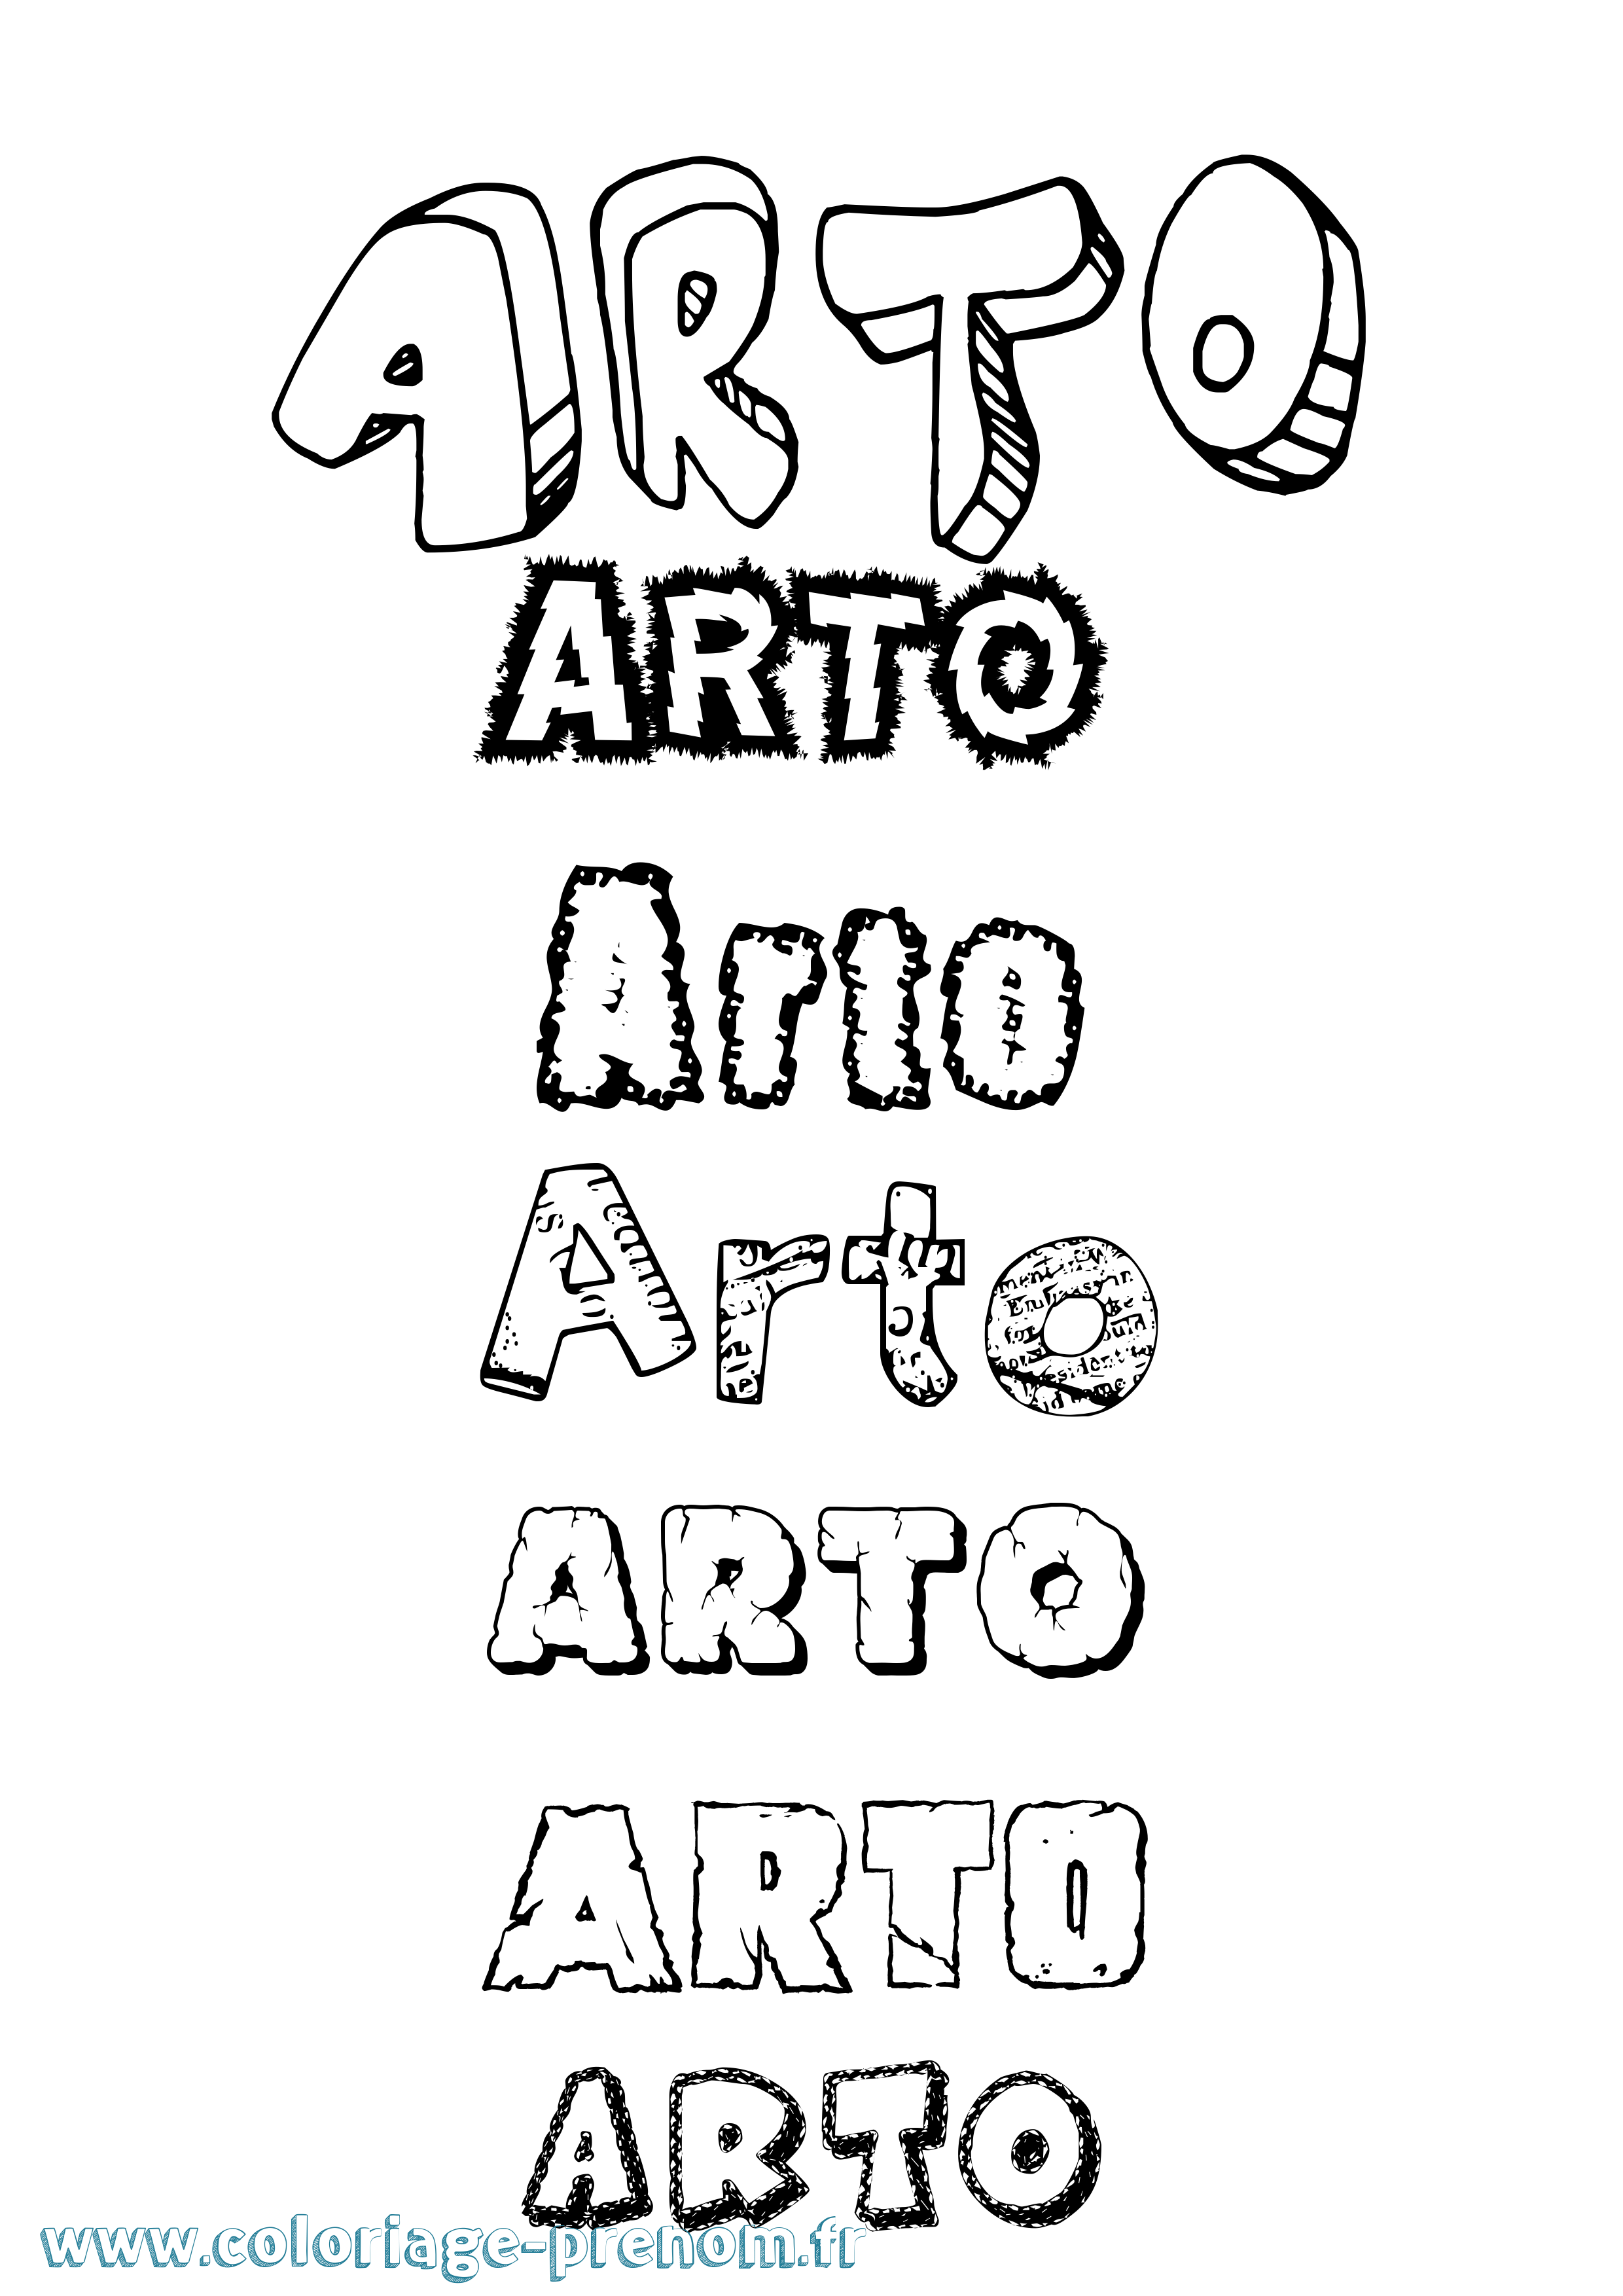 Coloriage prénom Arto